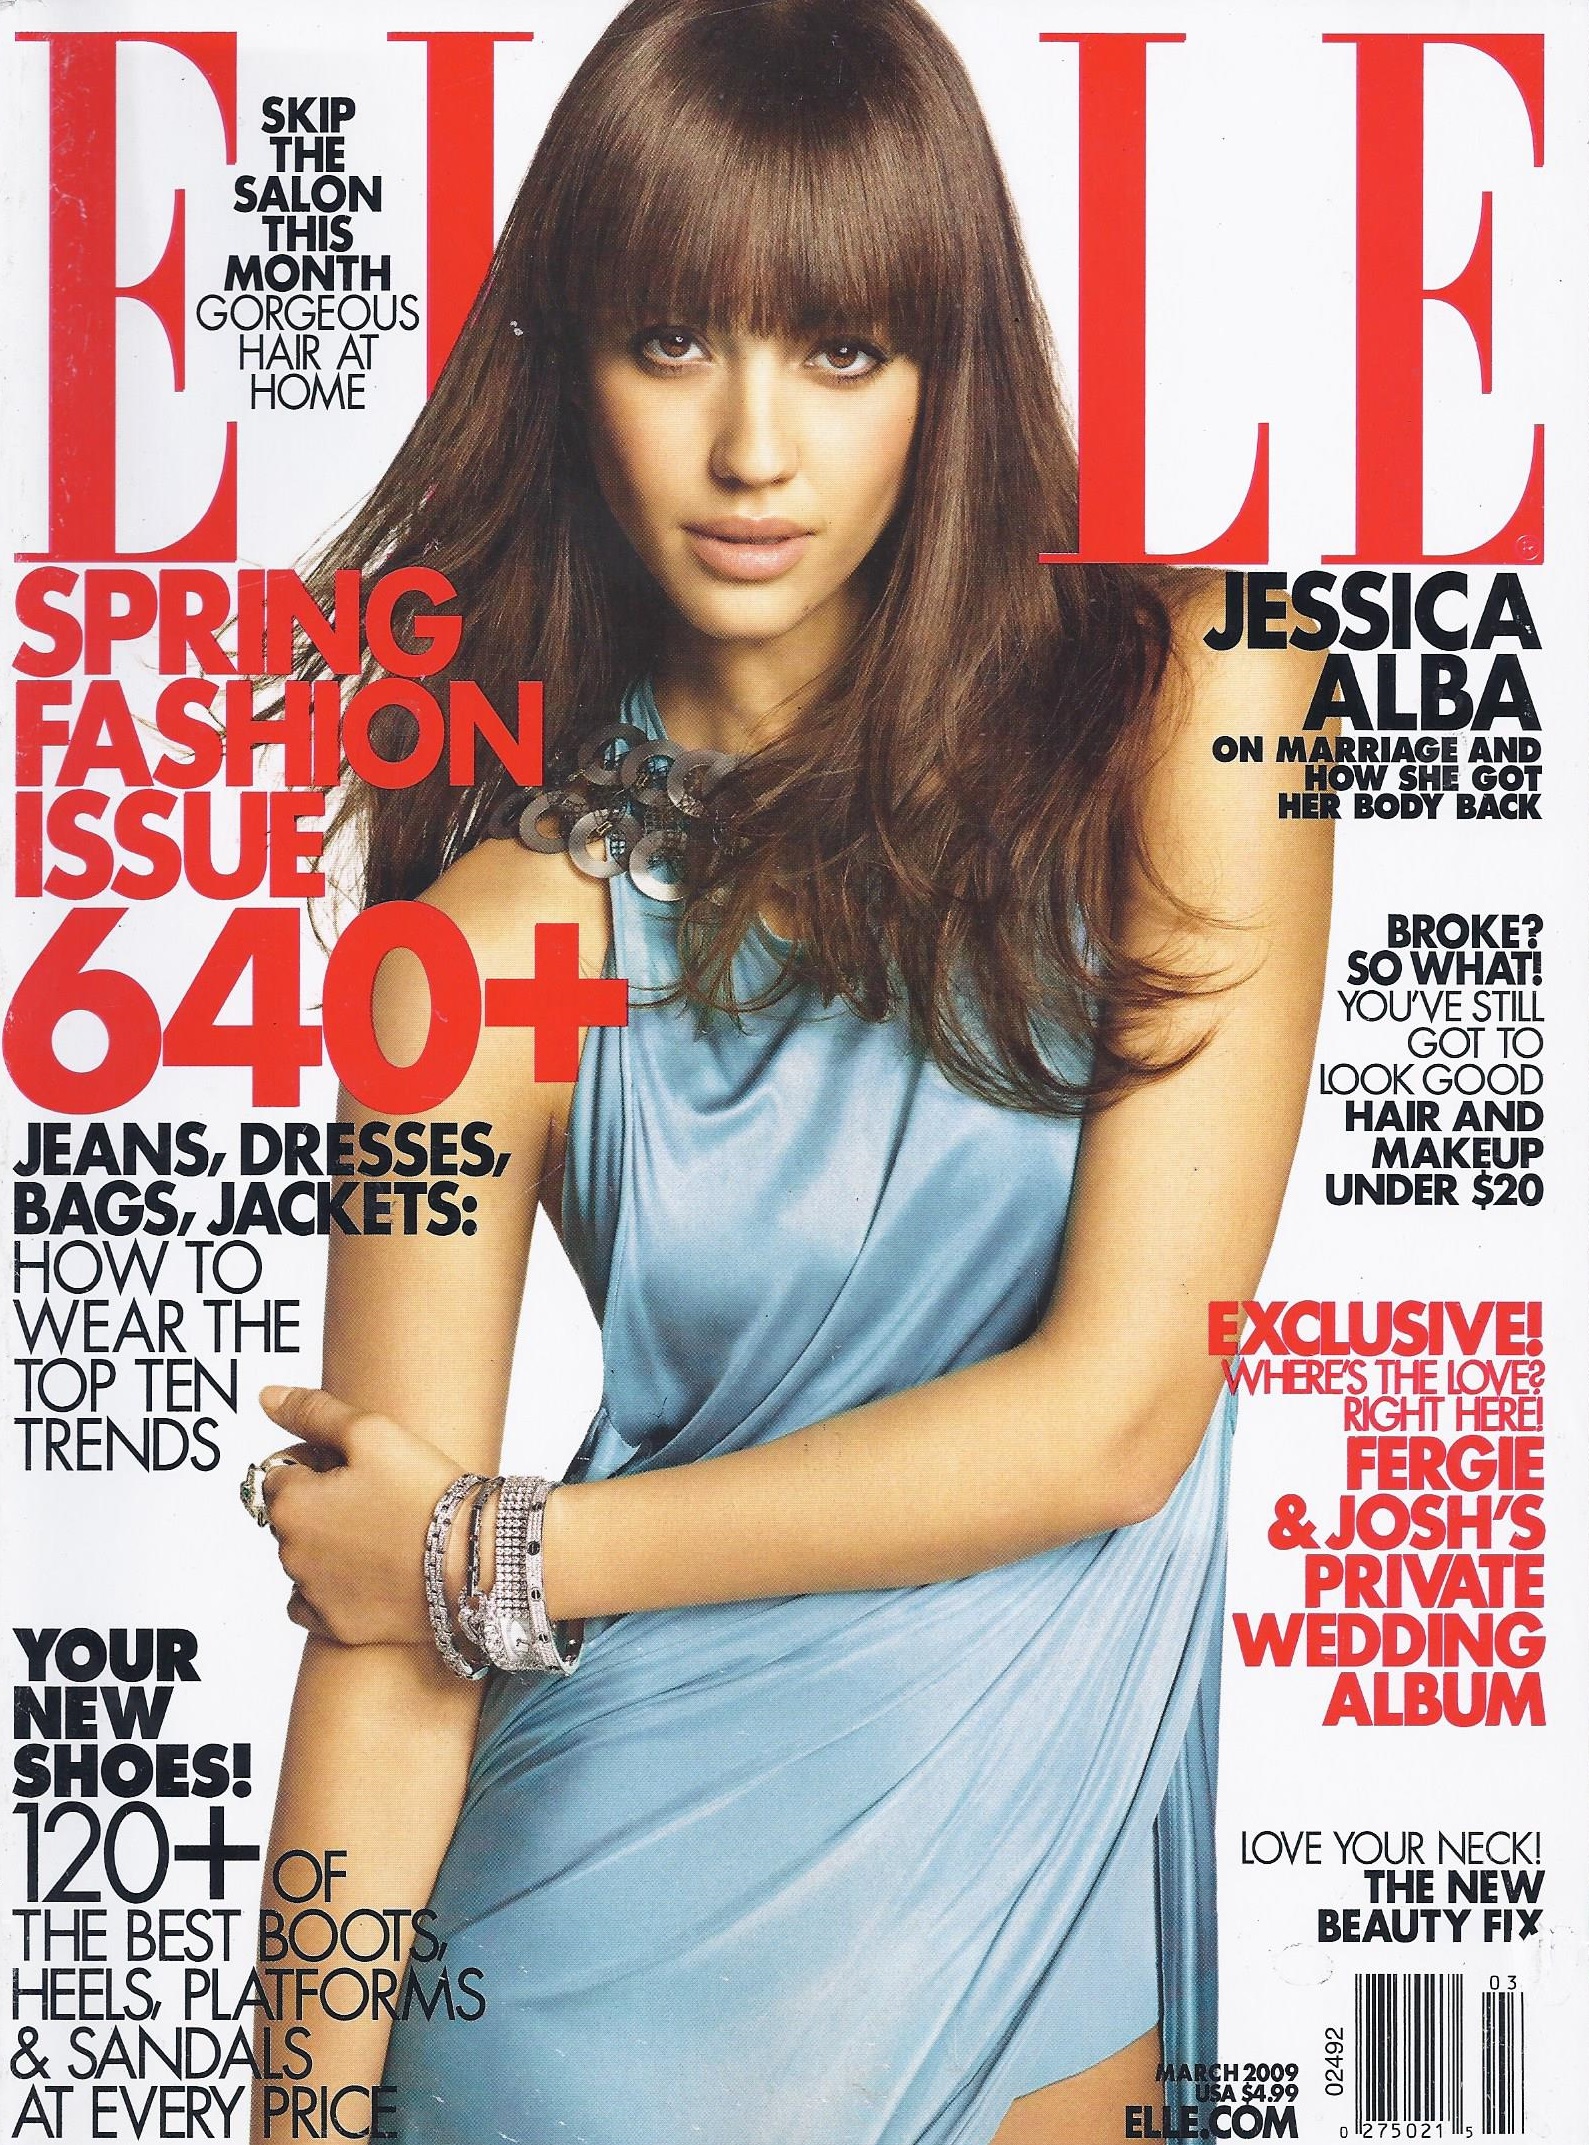 Elle Magazine Cover March 09.jpg